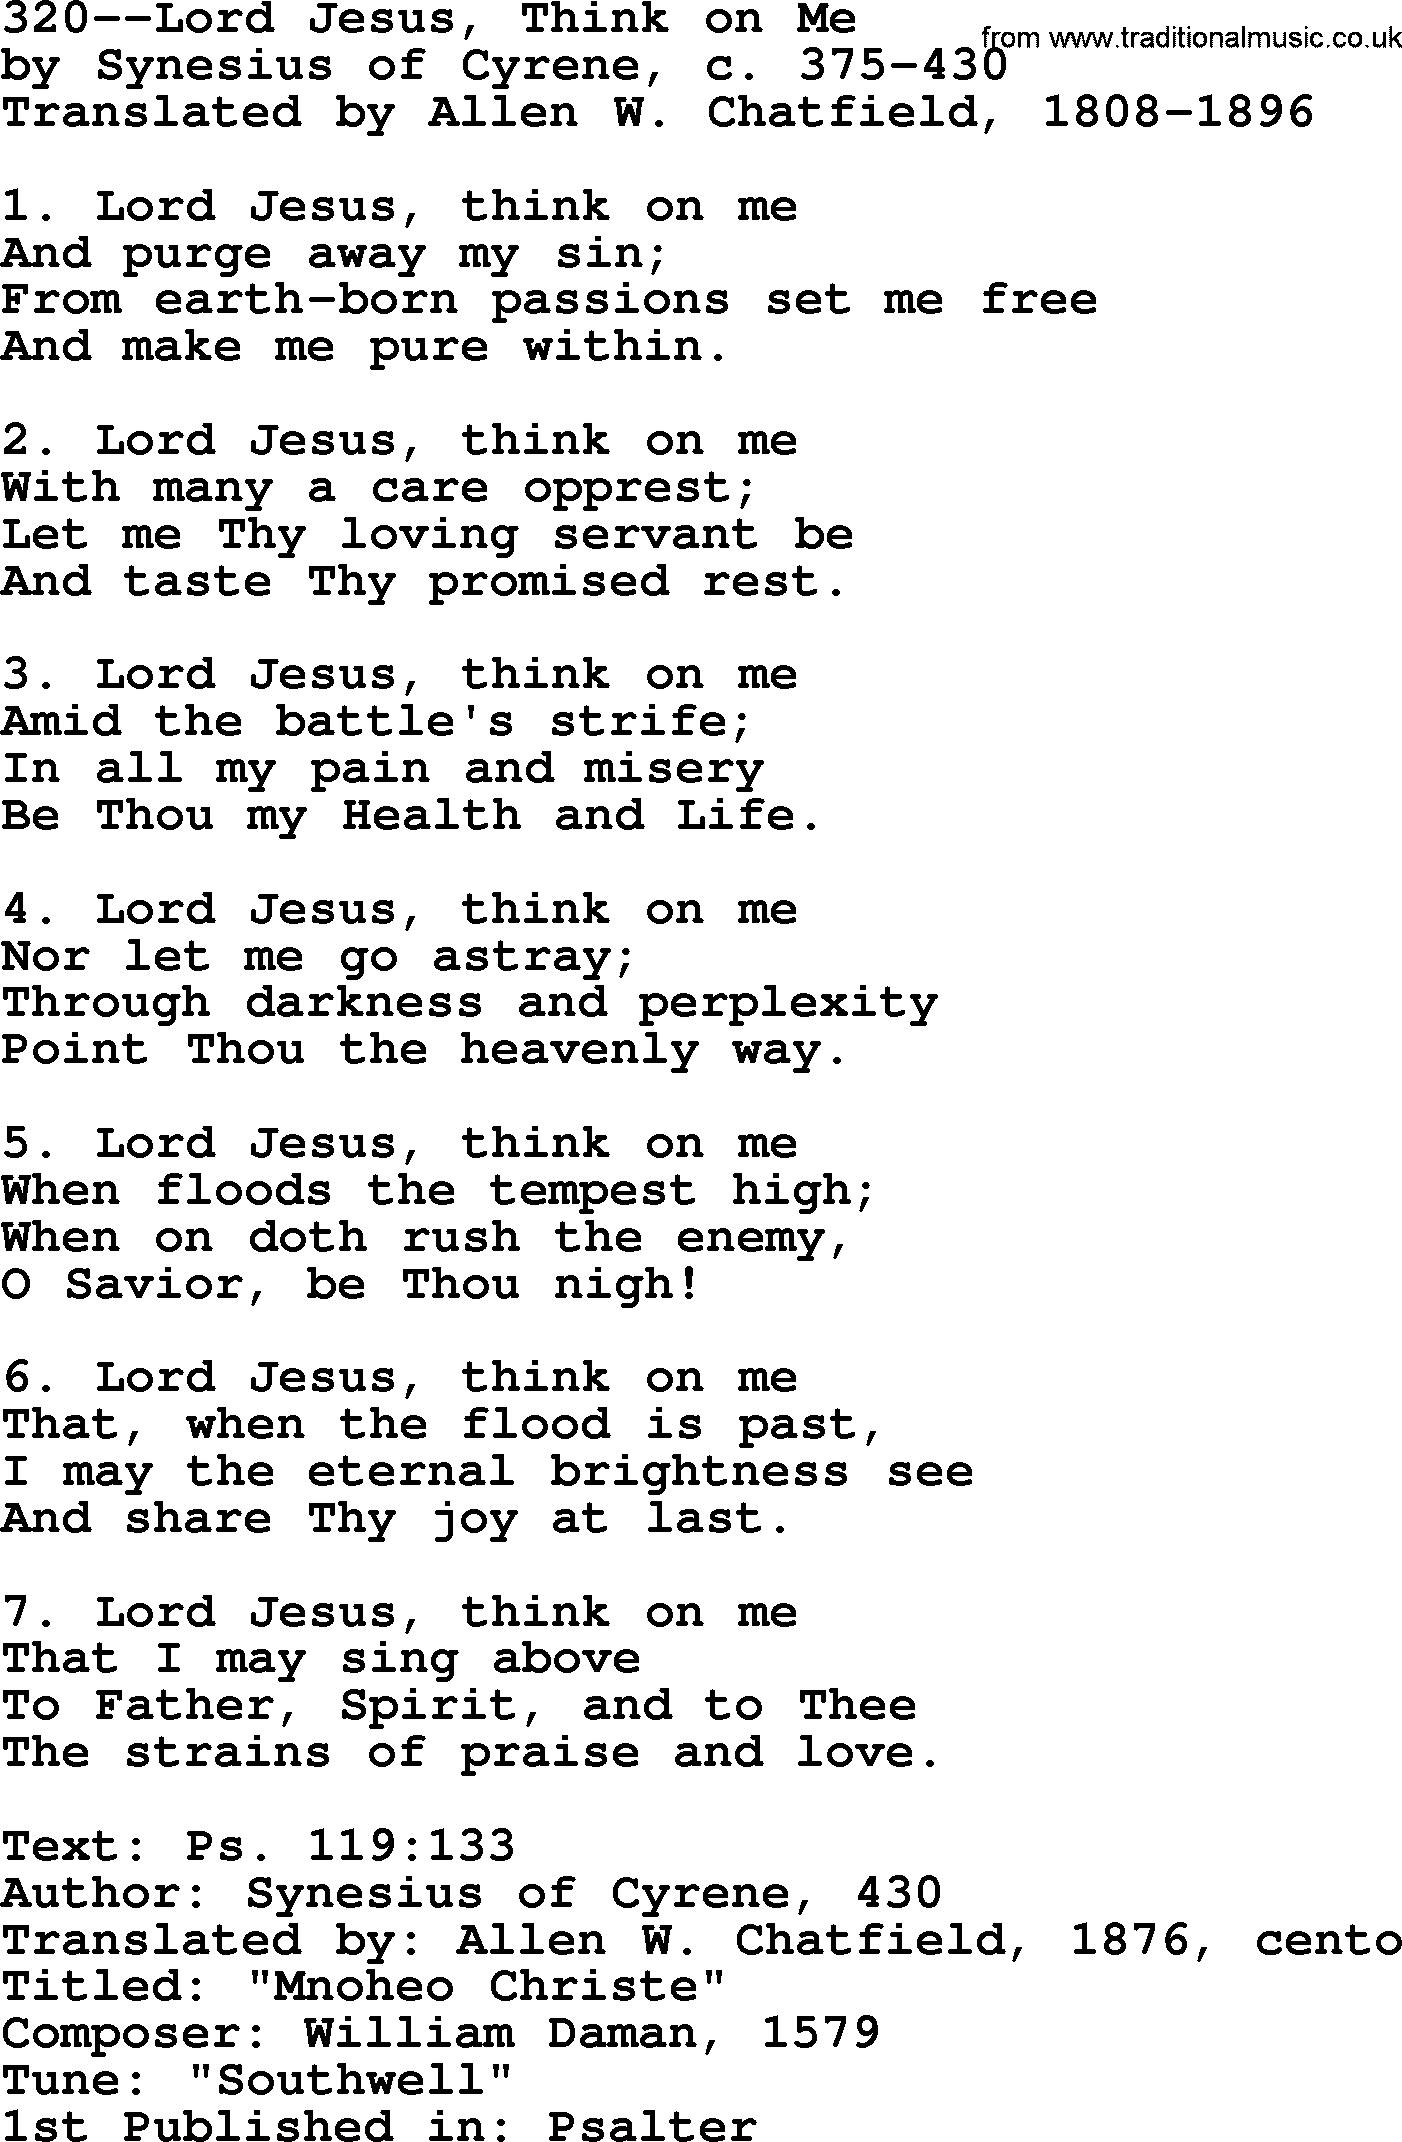 Lutheran Hymn: 320--Lord Jesus, Think on Me.txt lyrics with PDF